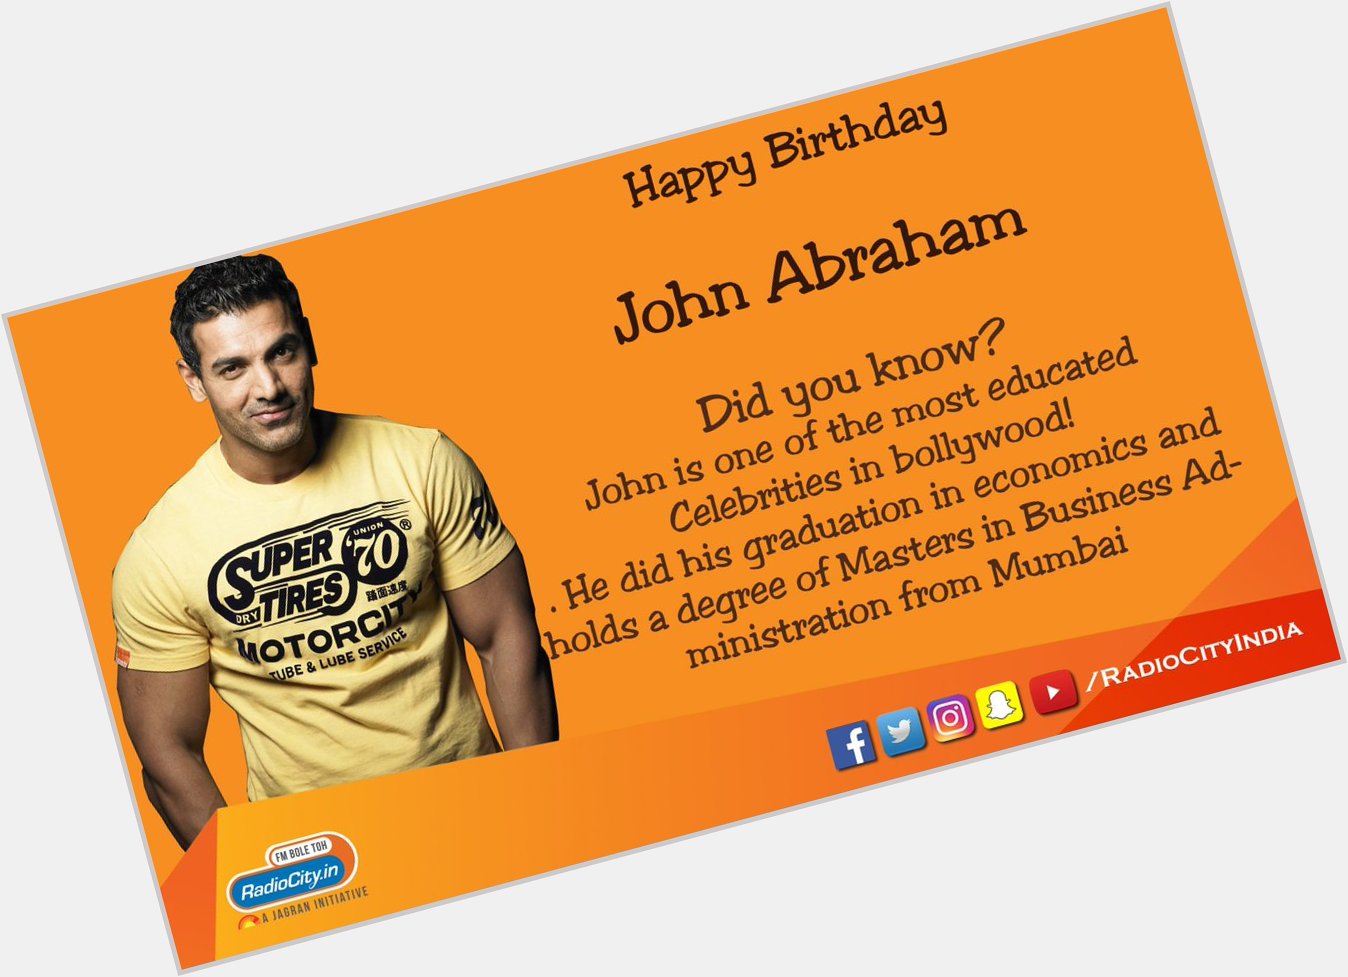 Wishing John Abraham a Very Happy Birthday!!
RJ Ashutosh  